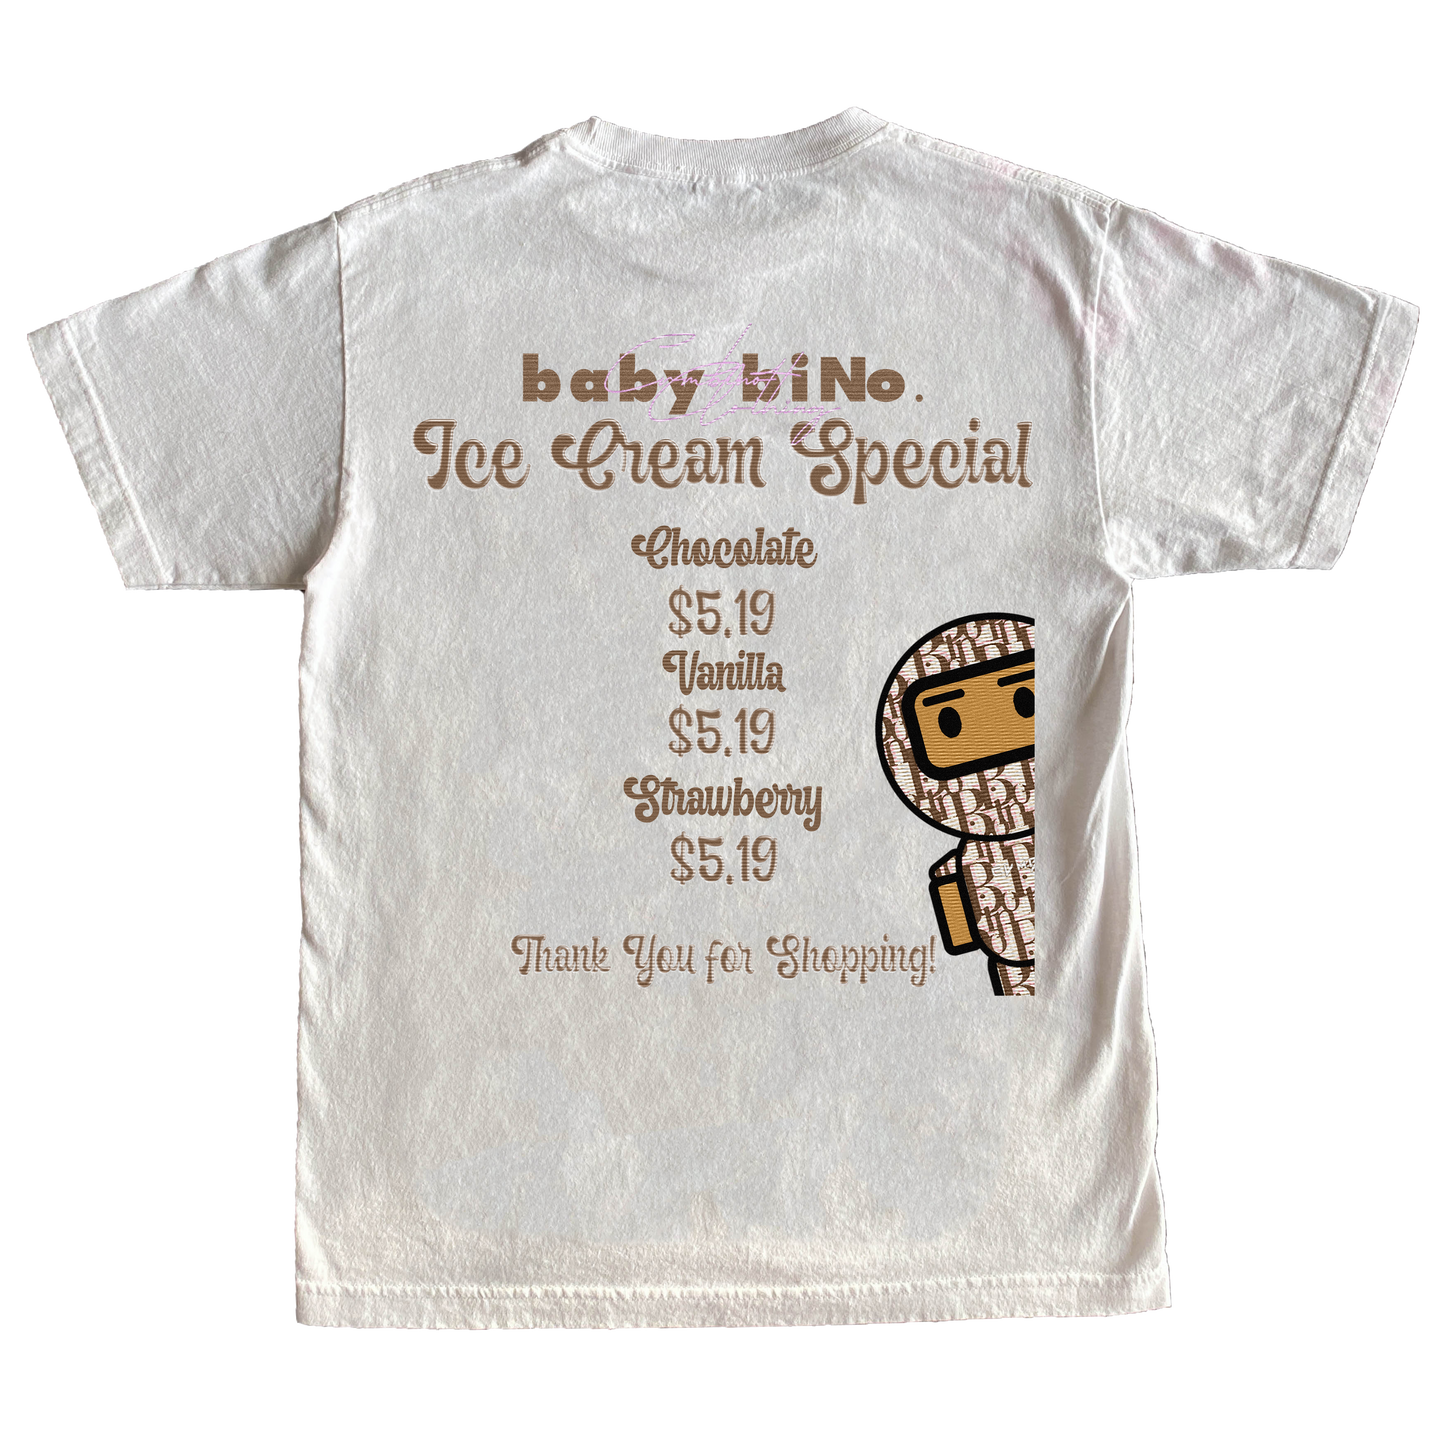 ICE CREAM SPECIAL BabyBiNo Tee